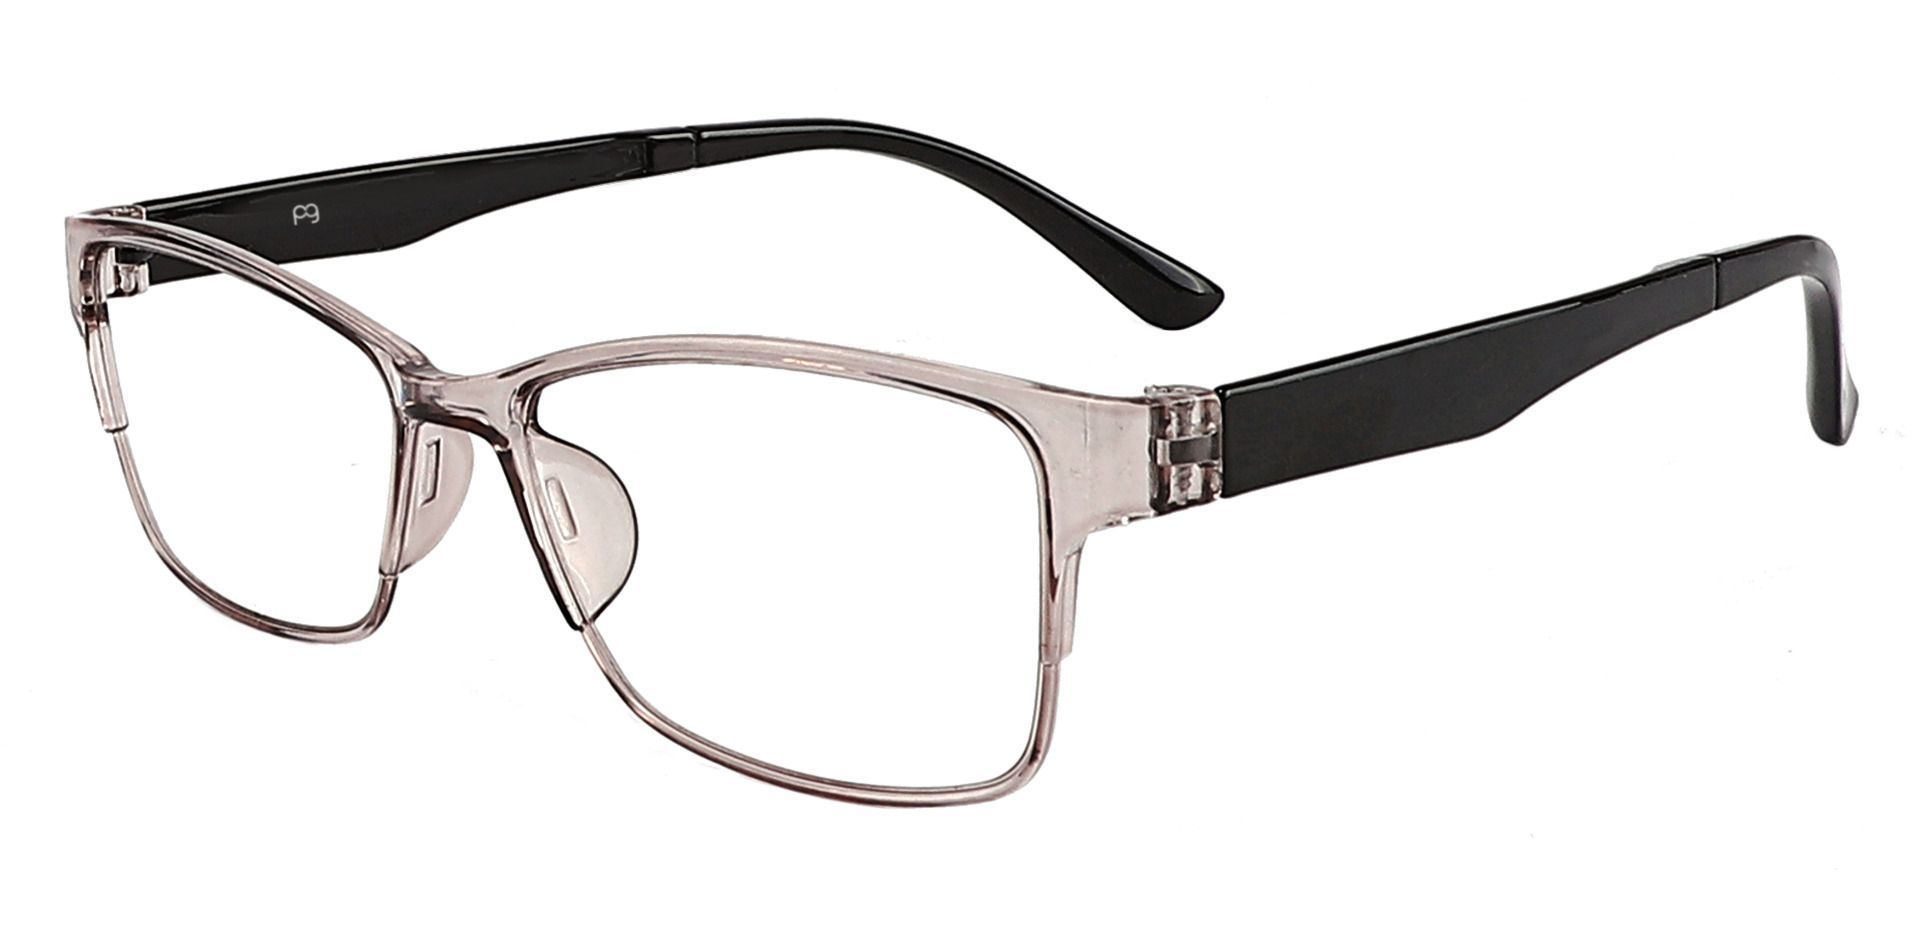 Cantwell Rectangle Prescription Glasses - Gray